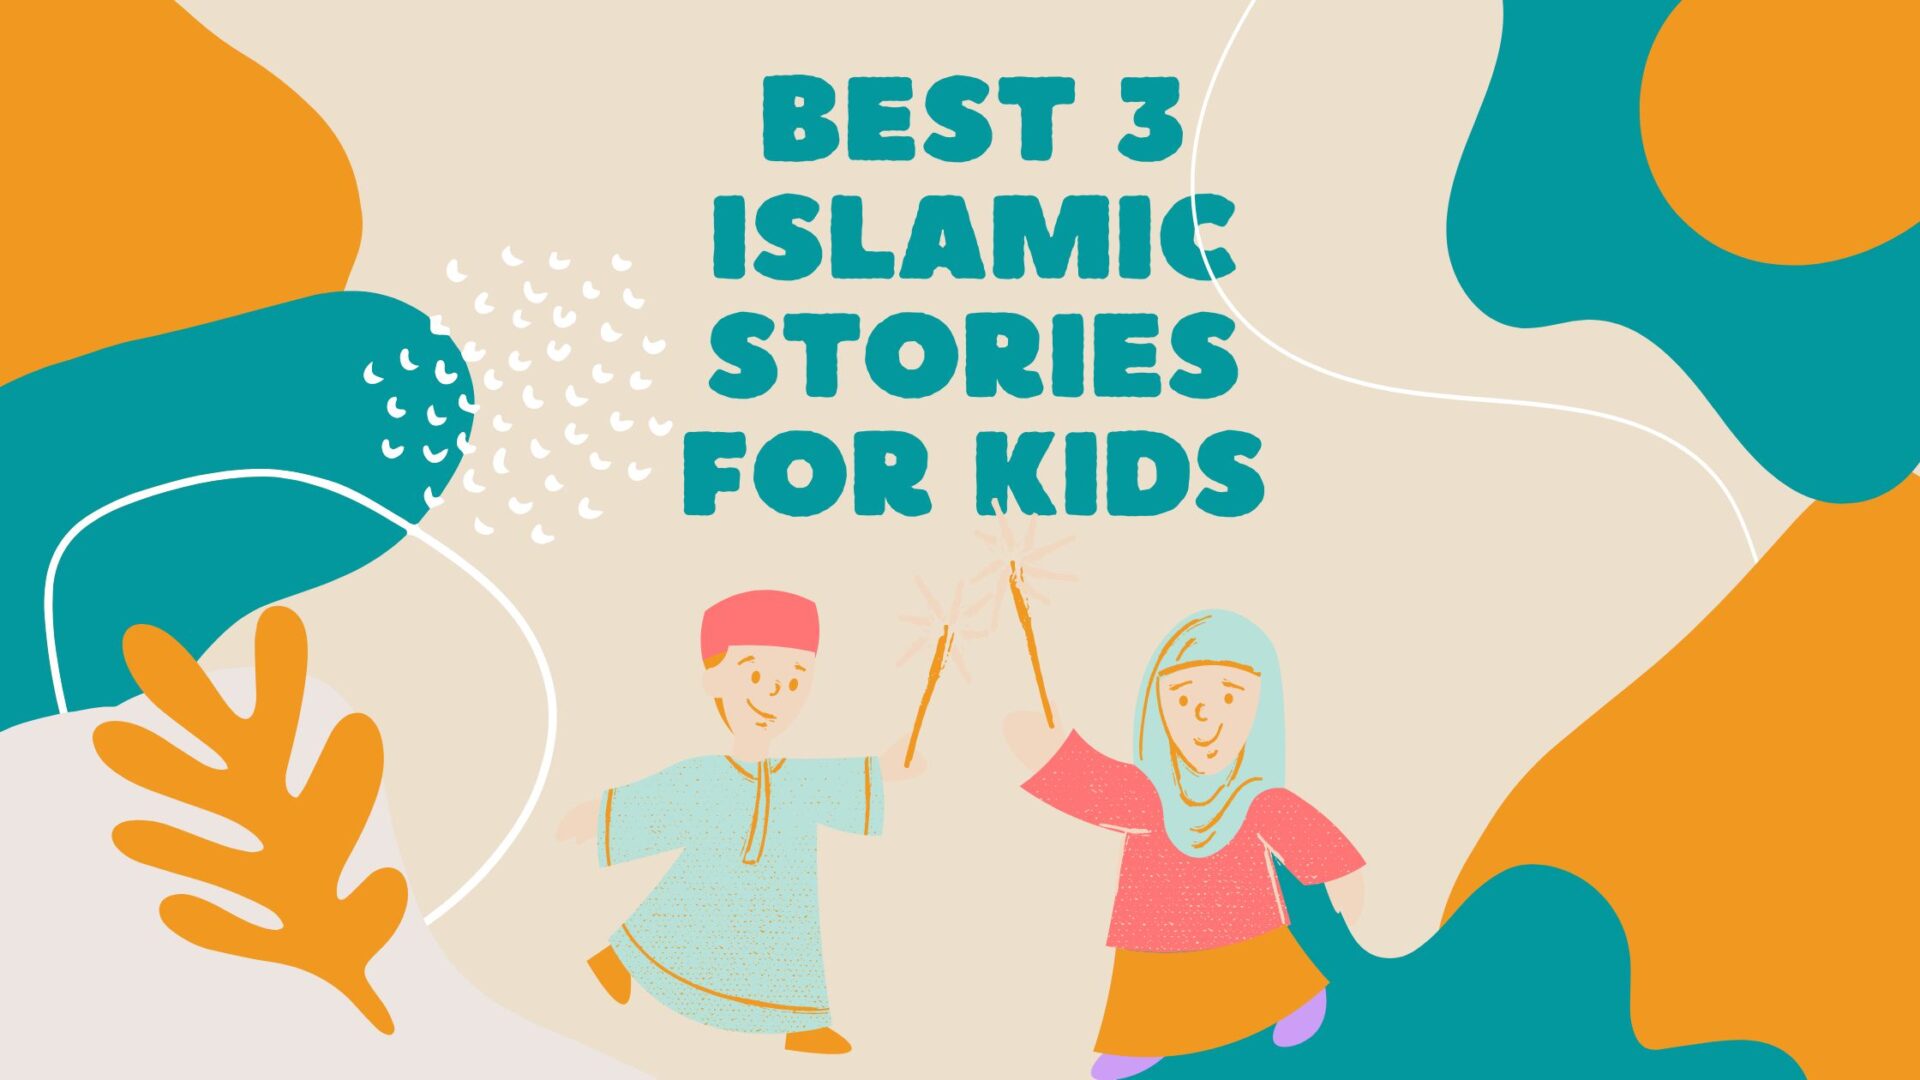 Best 3 Islamic stories For kids